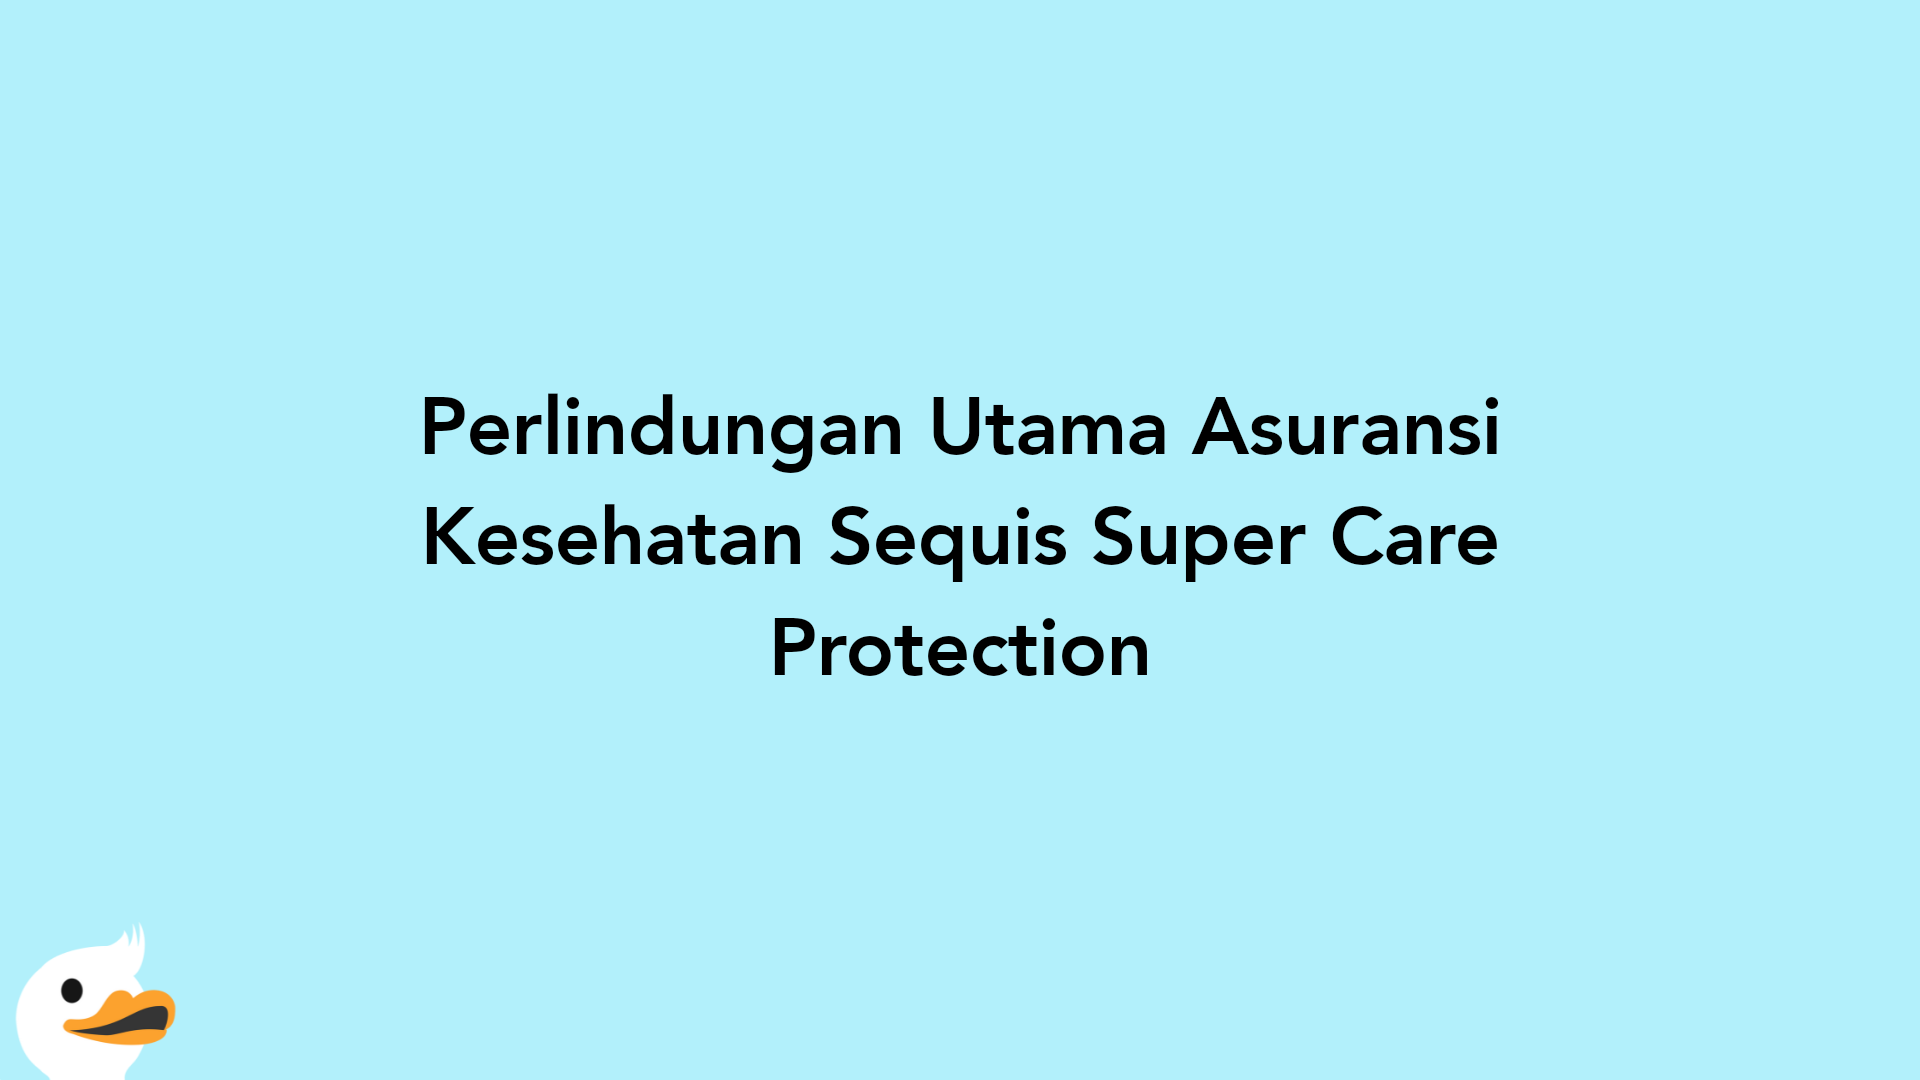 Perlindungan Utama Asuransi Kesehatan Sequis Super Care Protection